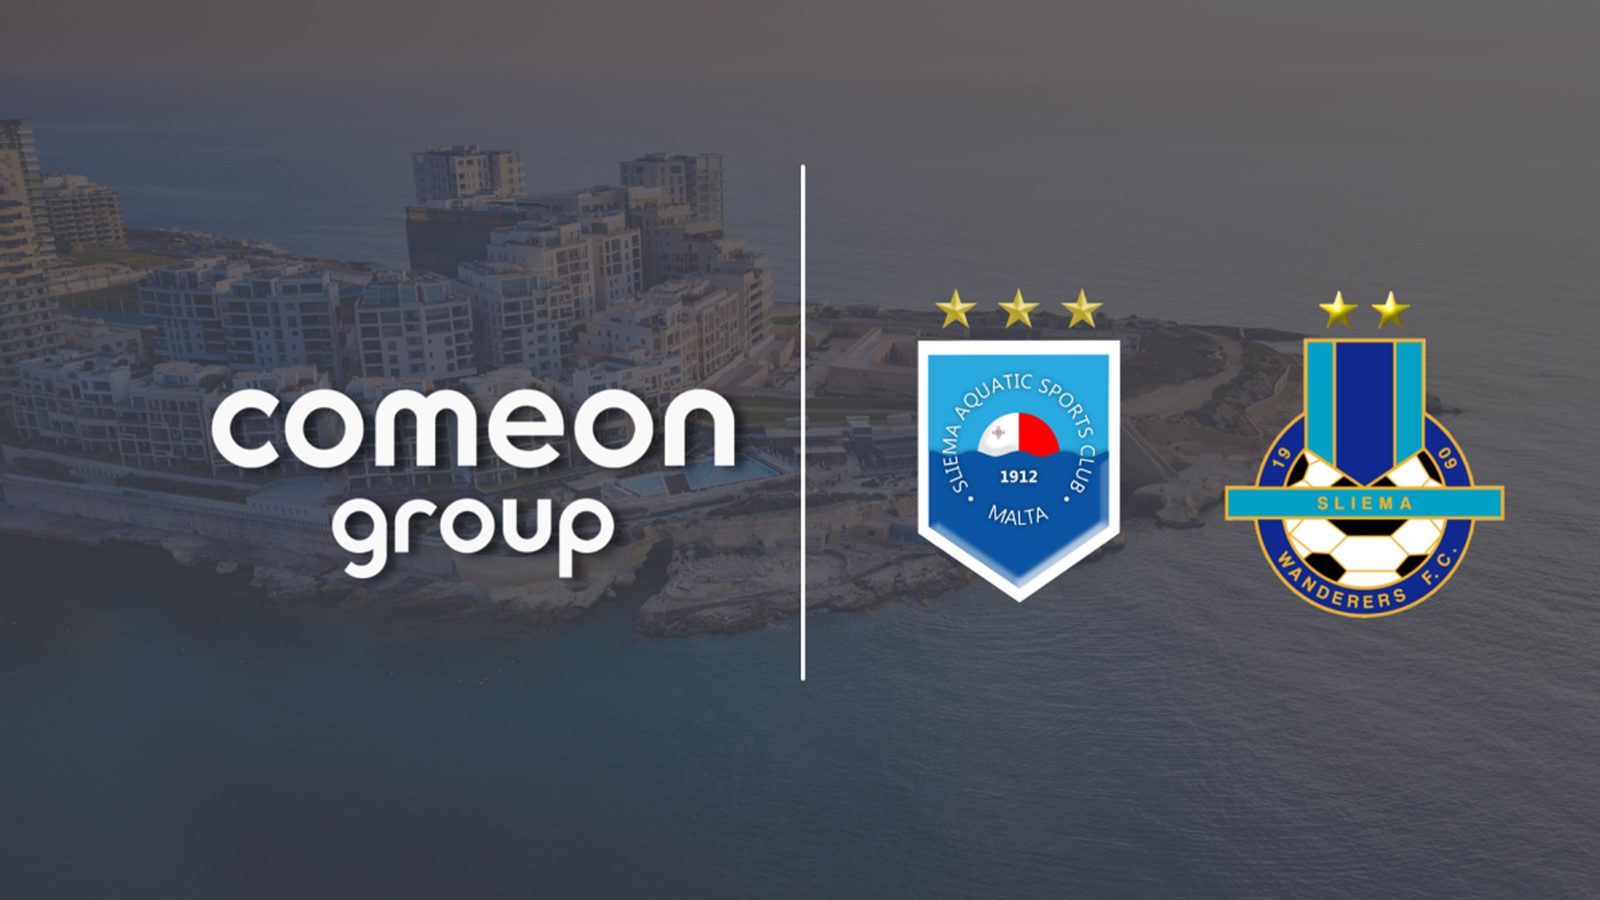 ComeOn Group Renews & Sliema Sports Clubs